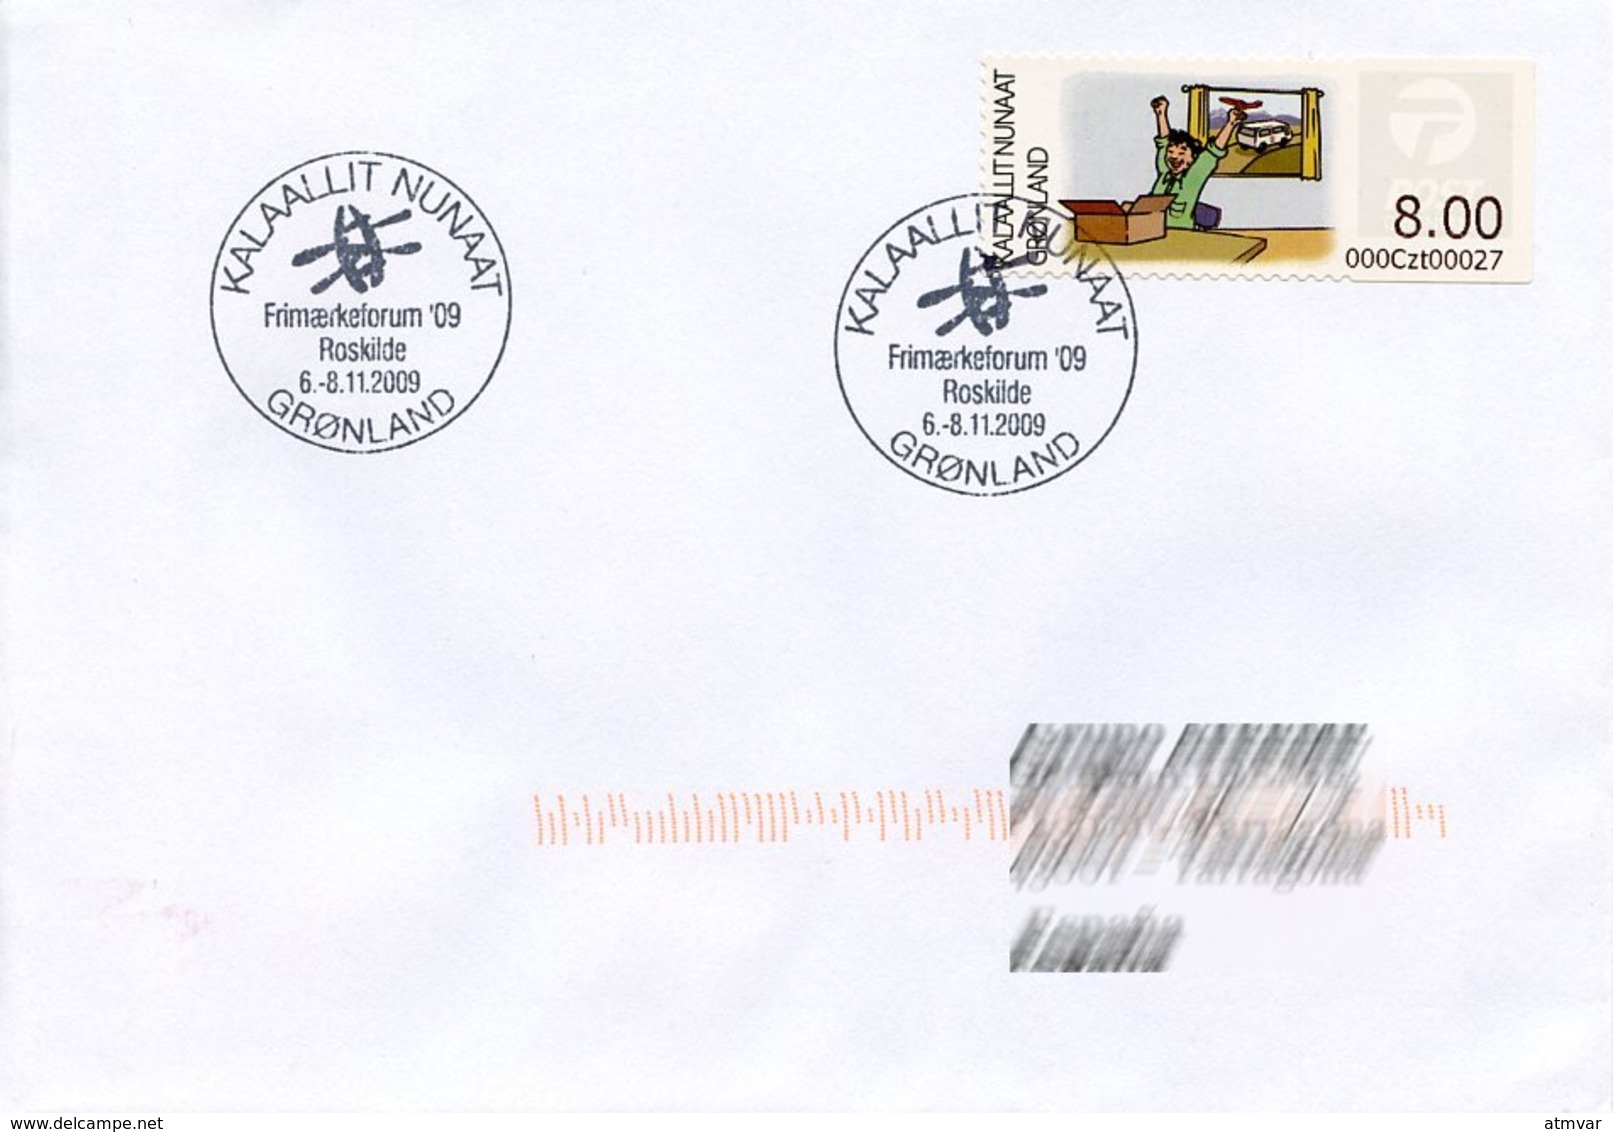 GREENLAND / GROENLAND (2009) - ATM - Receiving A Parcel, Post, Packet, Delivery, Van, Happy - Friemarkenforum Roskilde - Machine Stamps